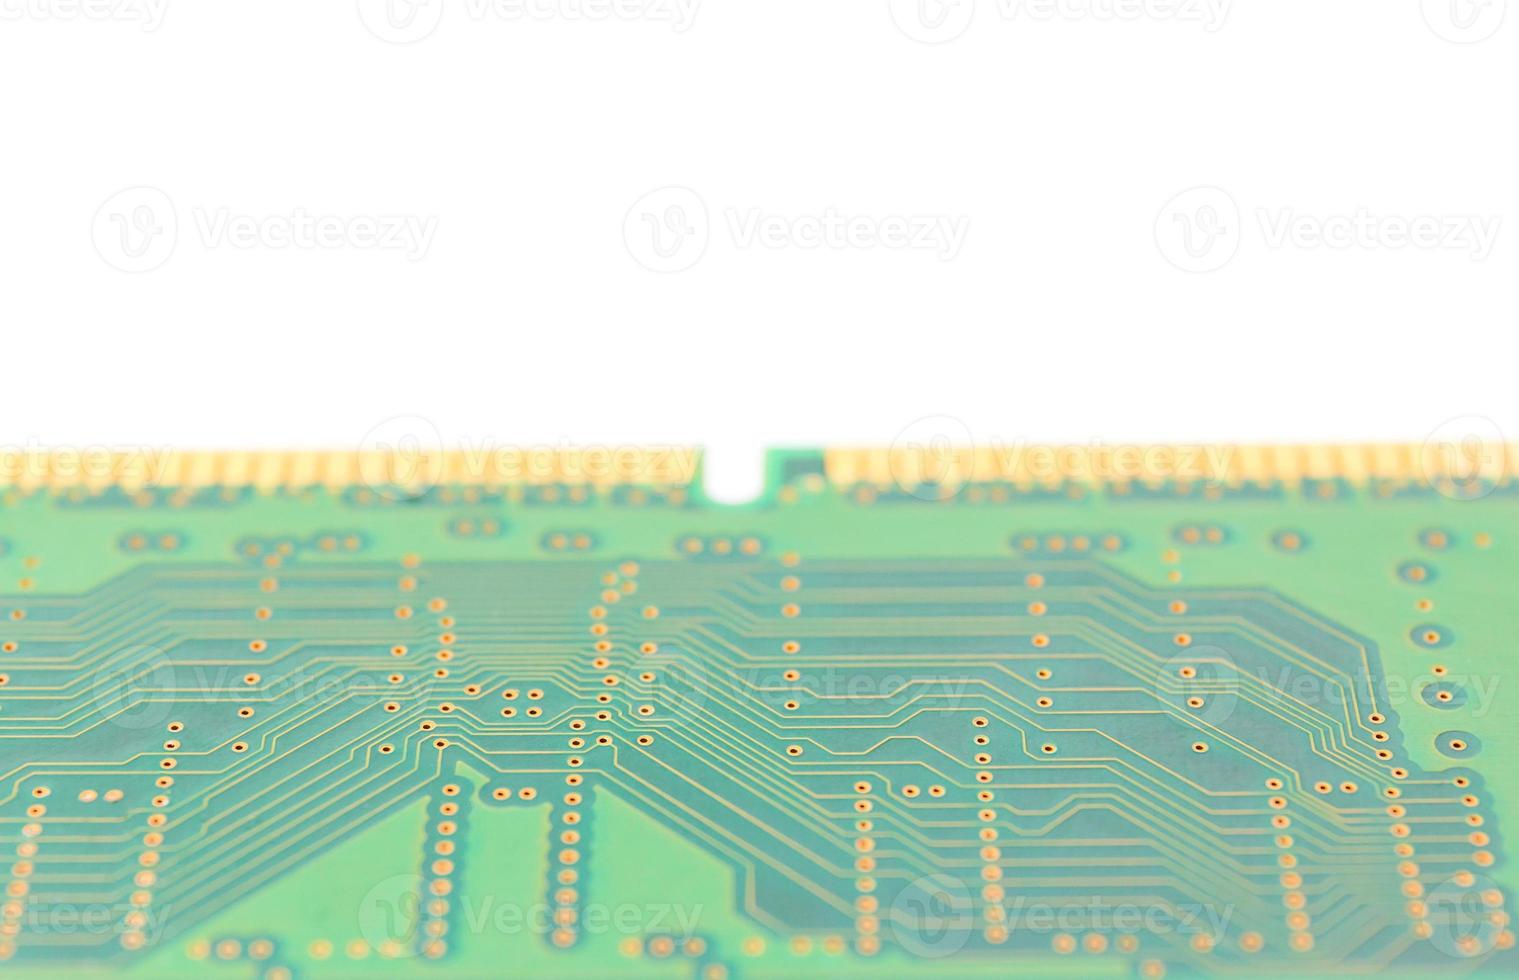 Random Access Memory DDR RAM photo